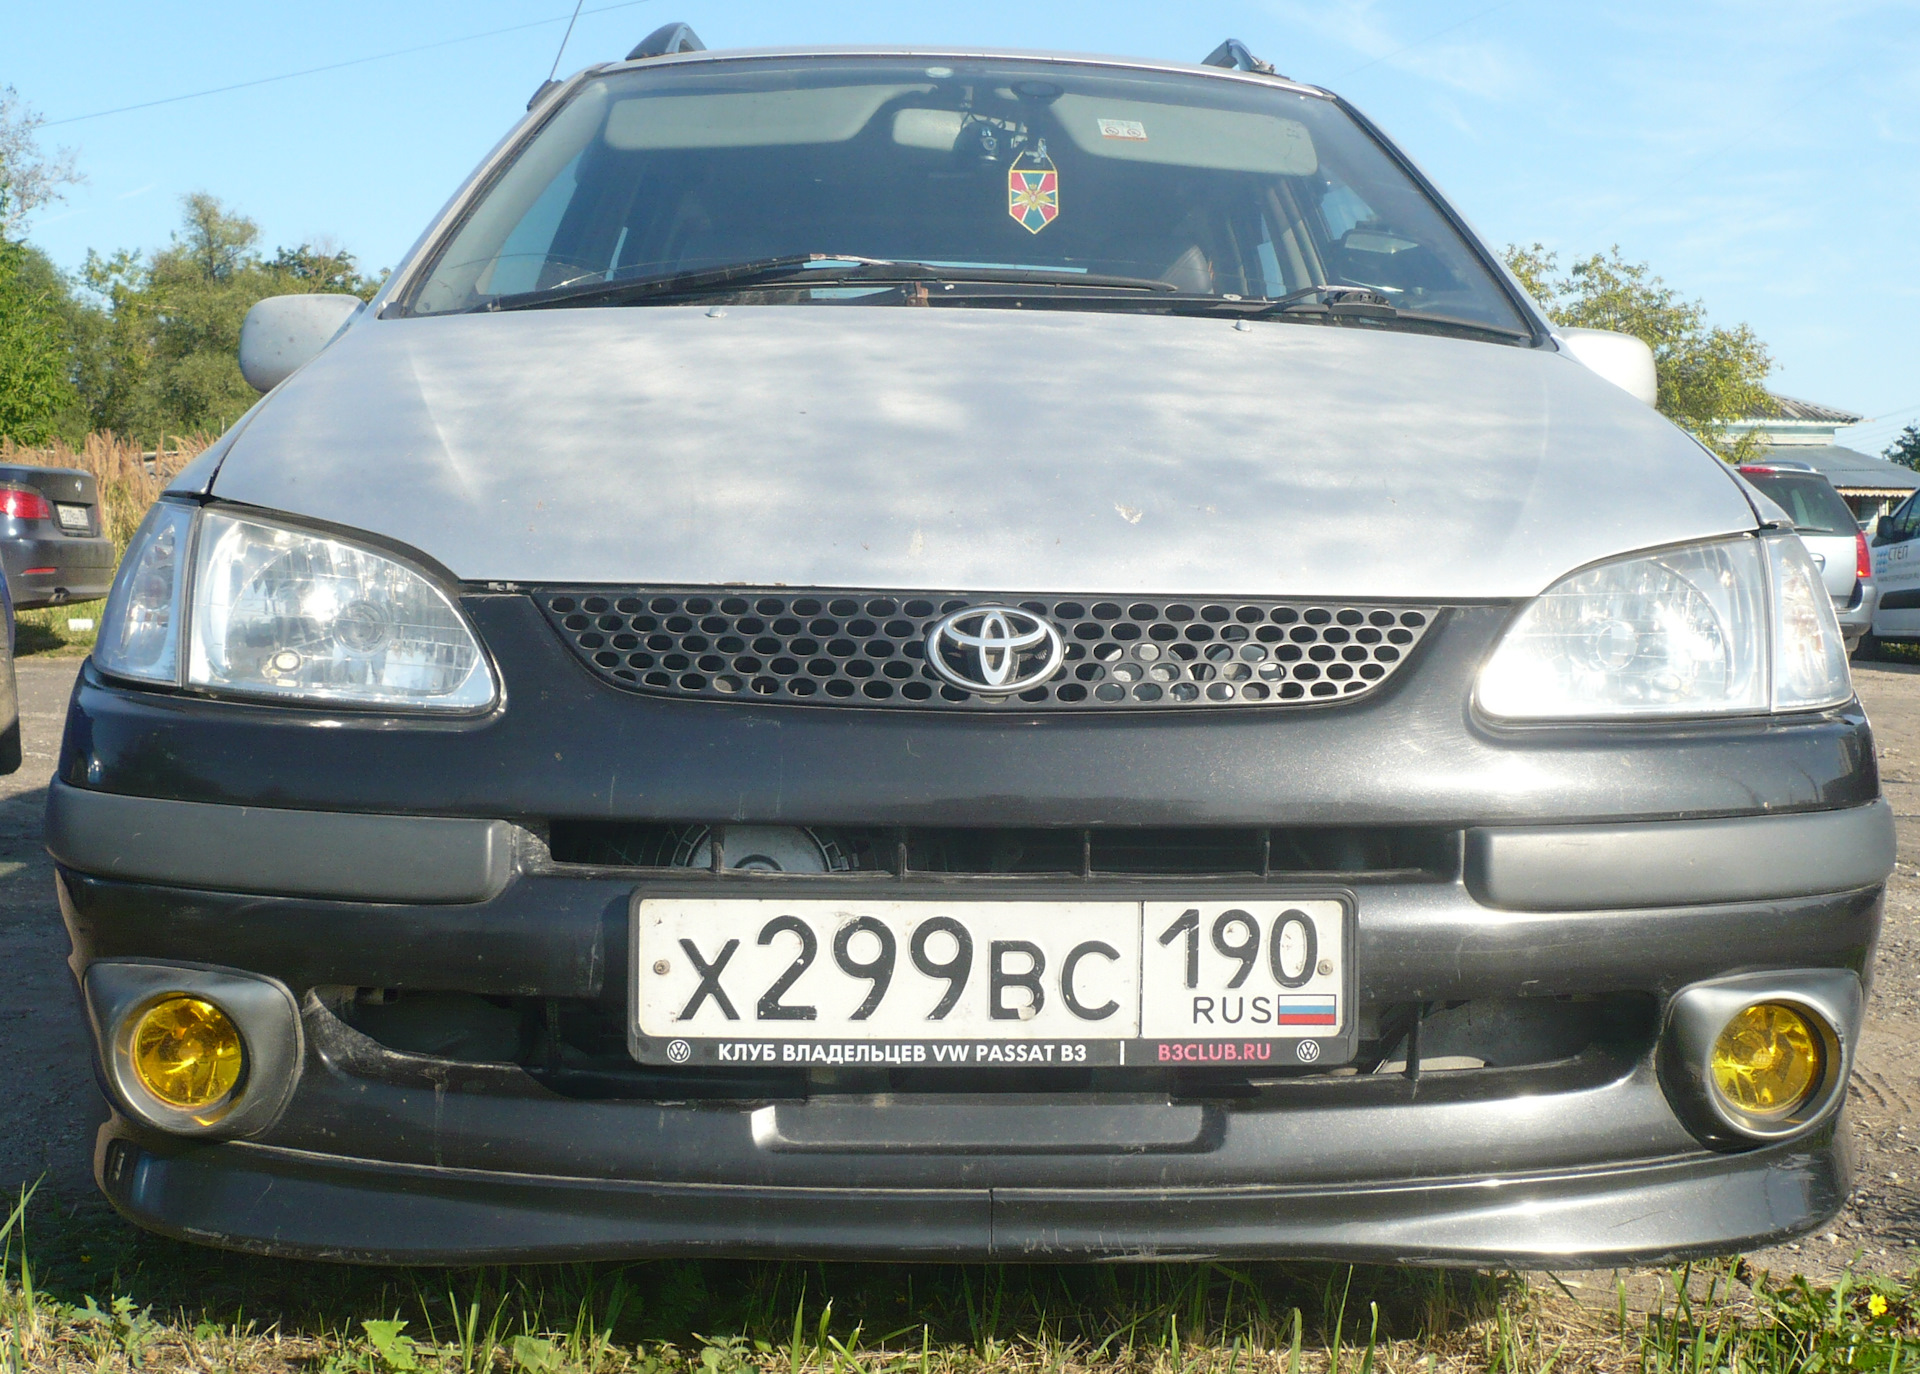 Купить бампер спасио. Бампер Rider Nissan Note. Passat b3 в Казахстане. Установка ПТФ HELLA Micro de - Toyota Corolla Spacio (e110), 1,6 л., 1998 года т. Обвес gr Passat b3.